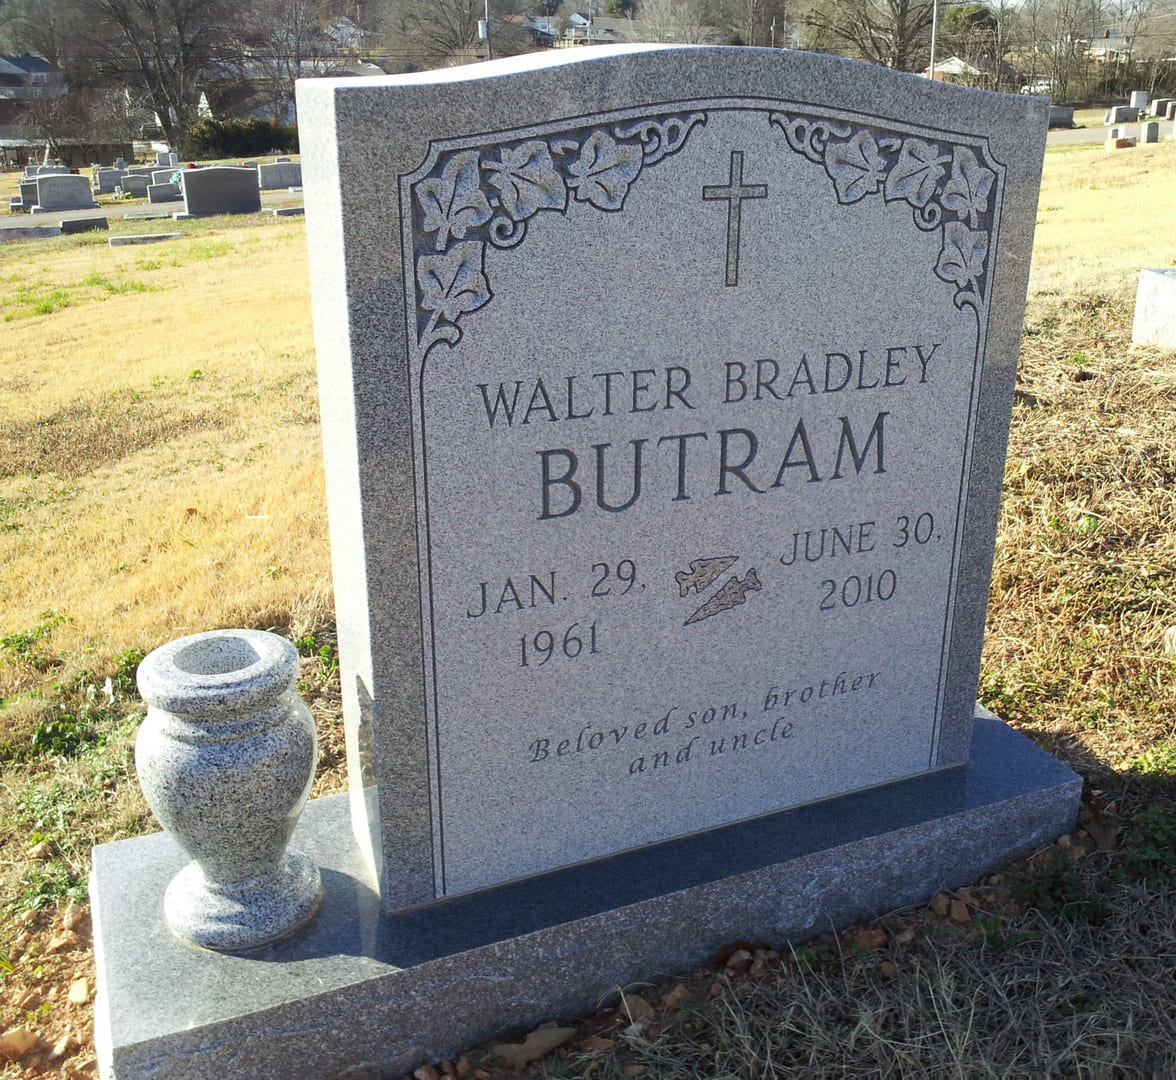 A memorial slab for Walter Bradley Butram